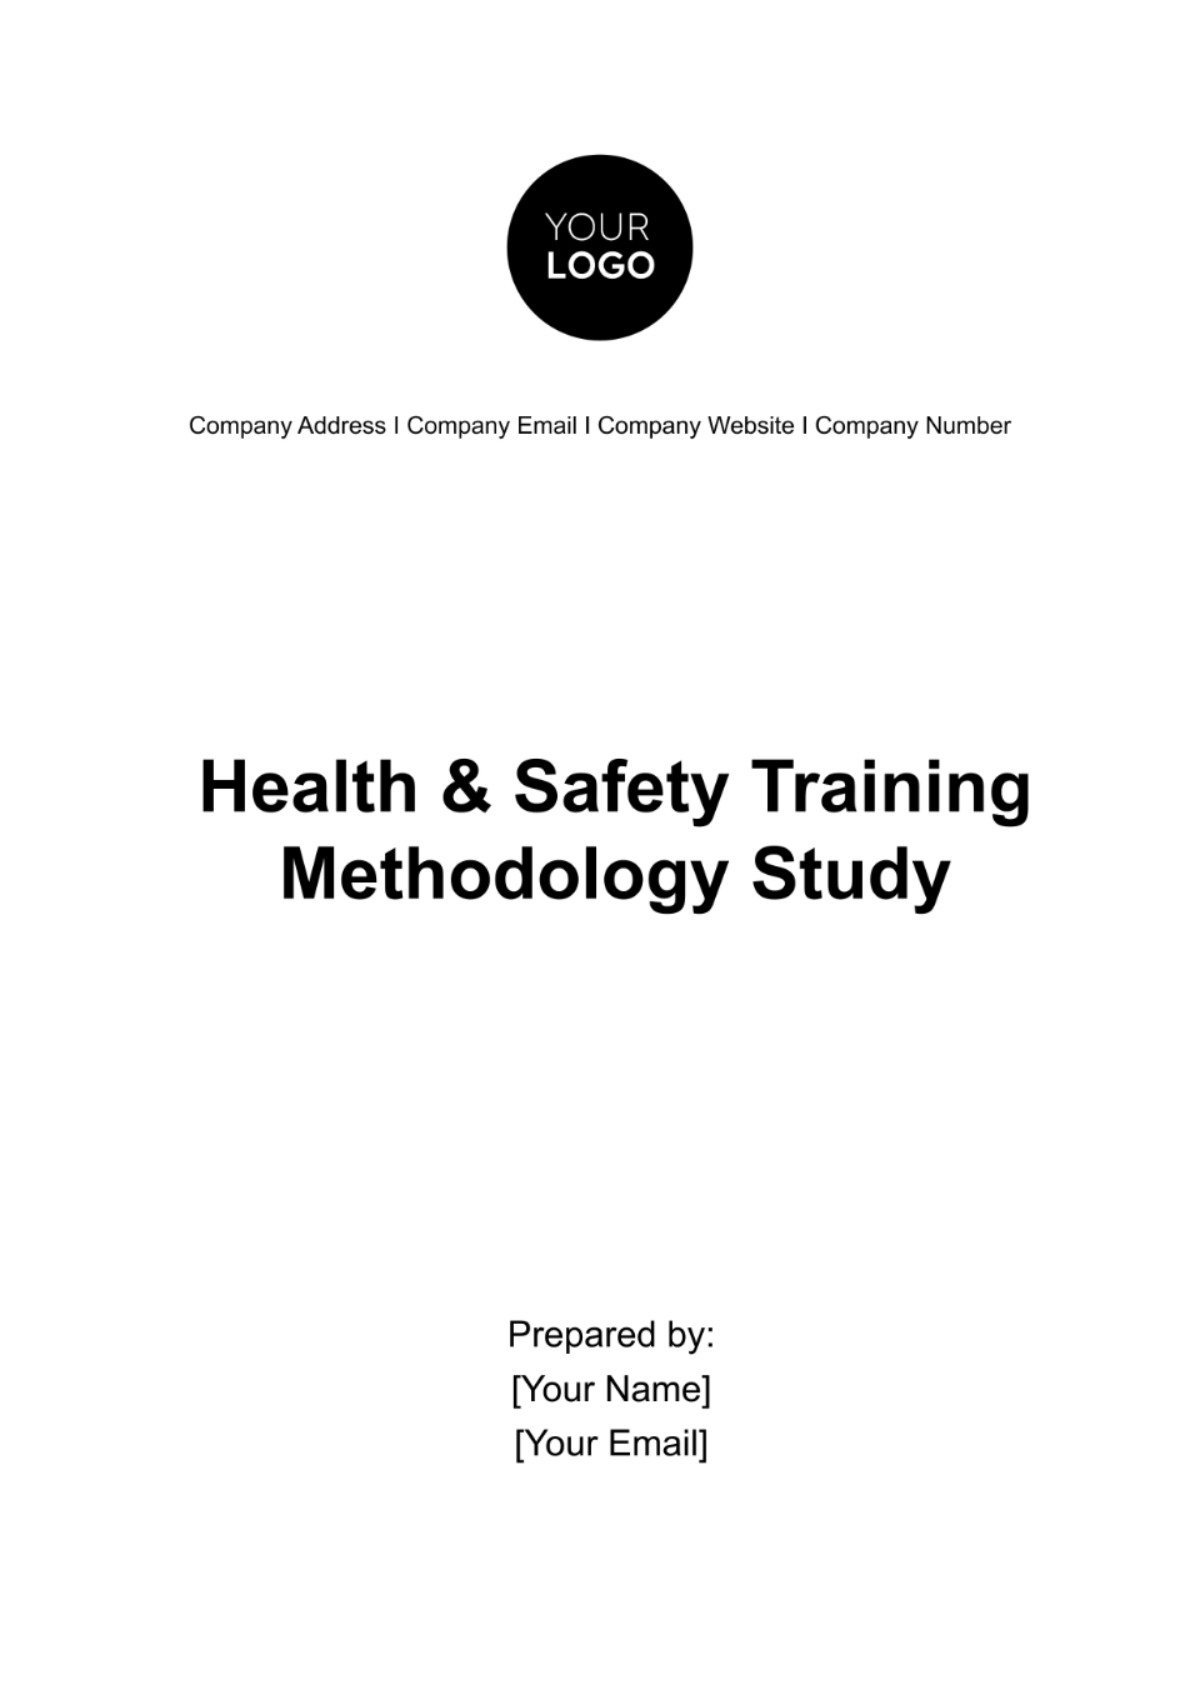 Health & Safety Training Methodology Study Template